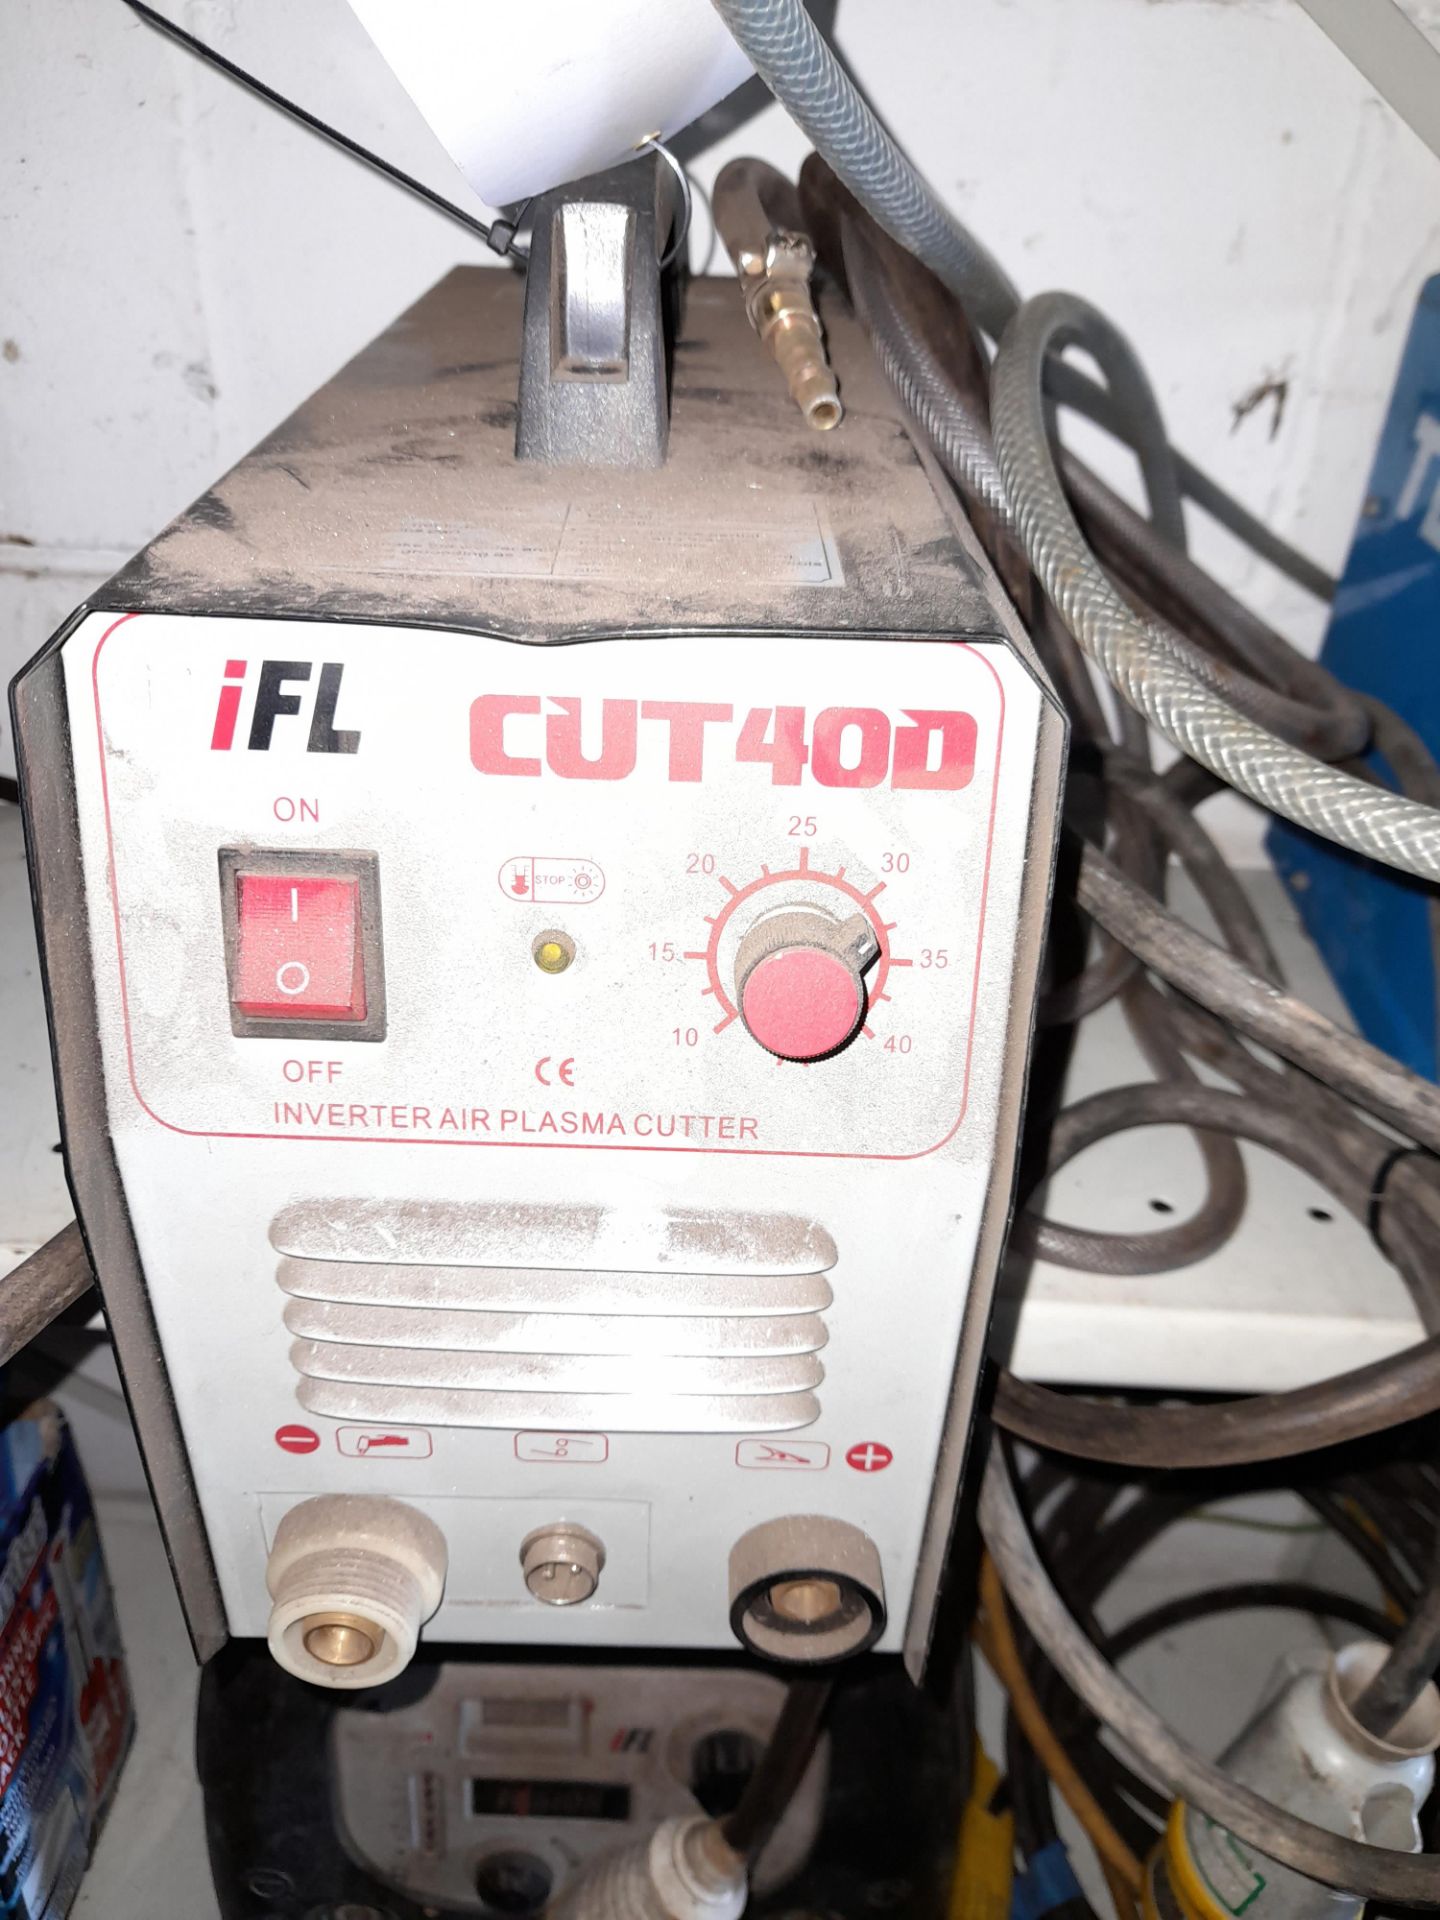 IFL CUT400 inverter air plasma cutter - Image 2 of 2